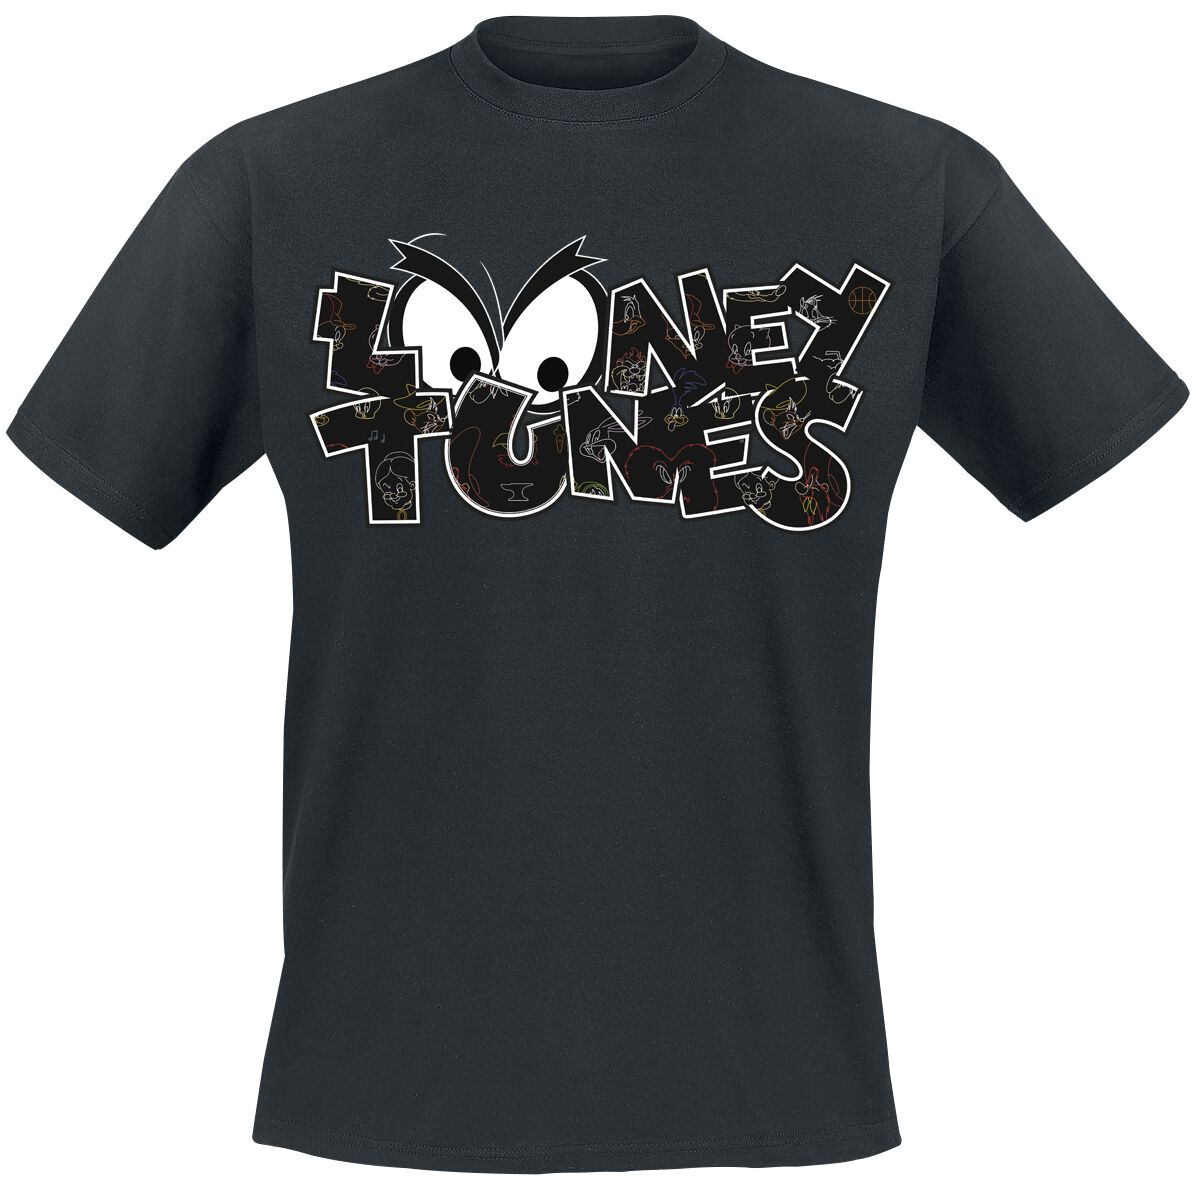 Looney Tunes Eyes! T-Shirt black